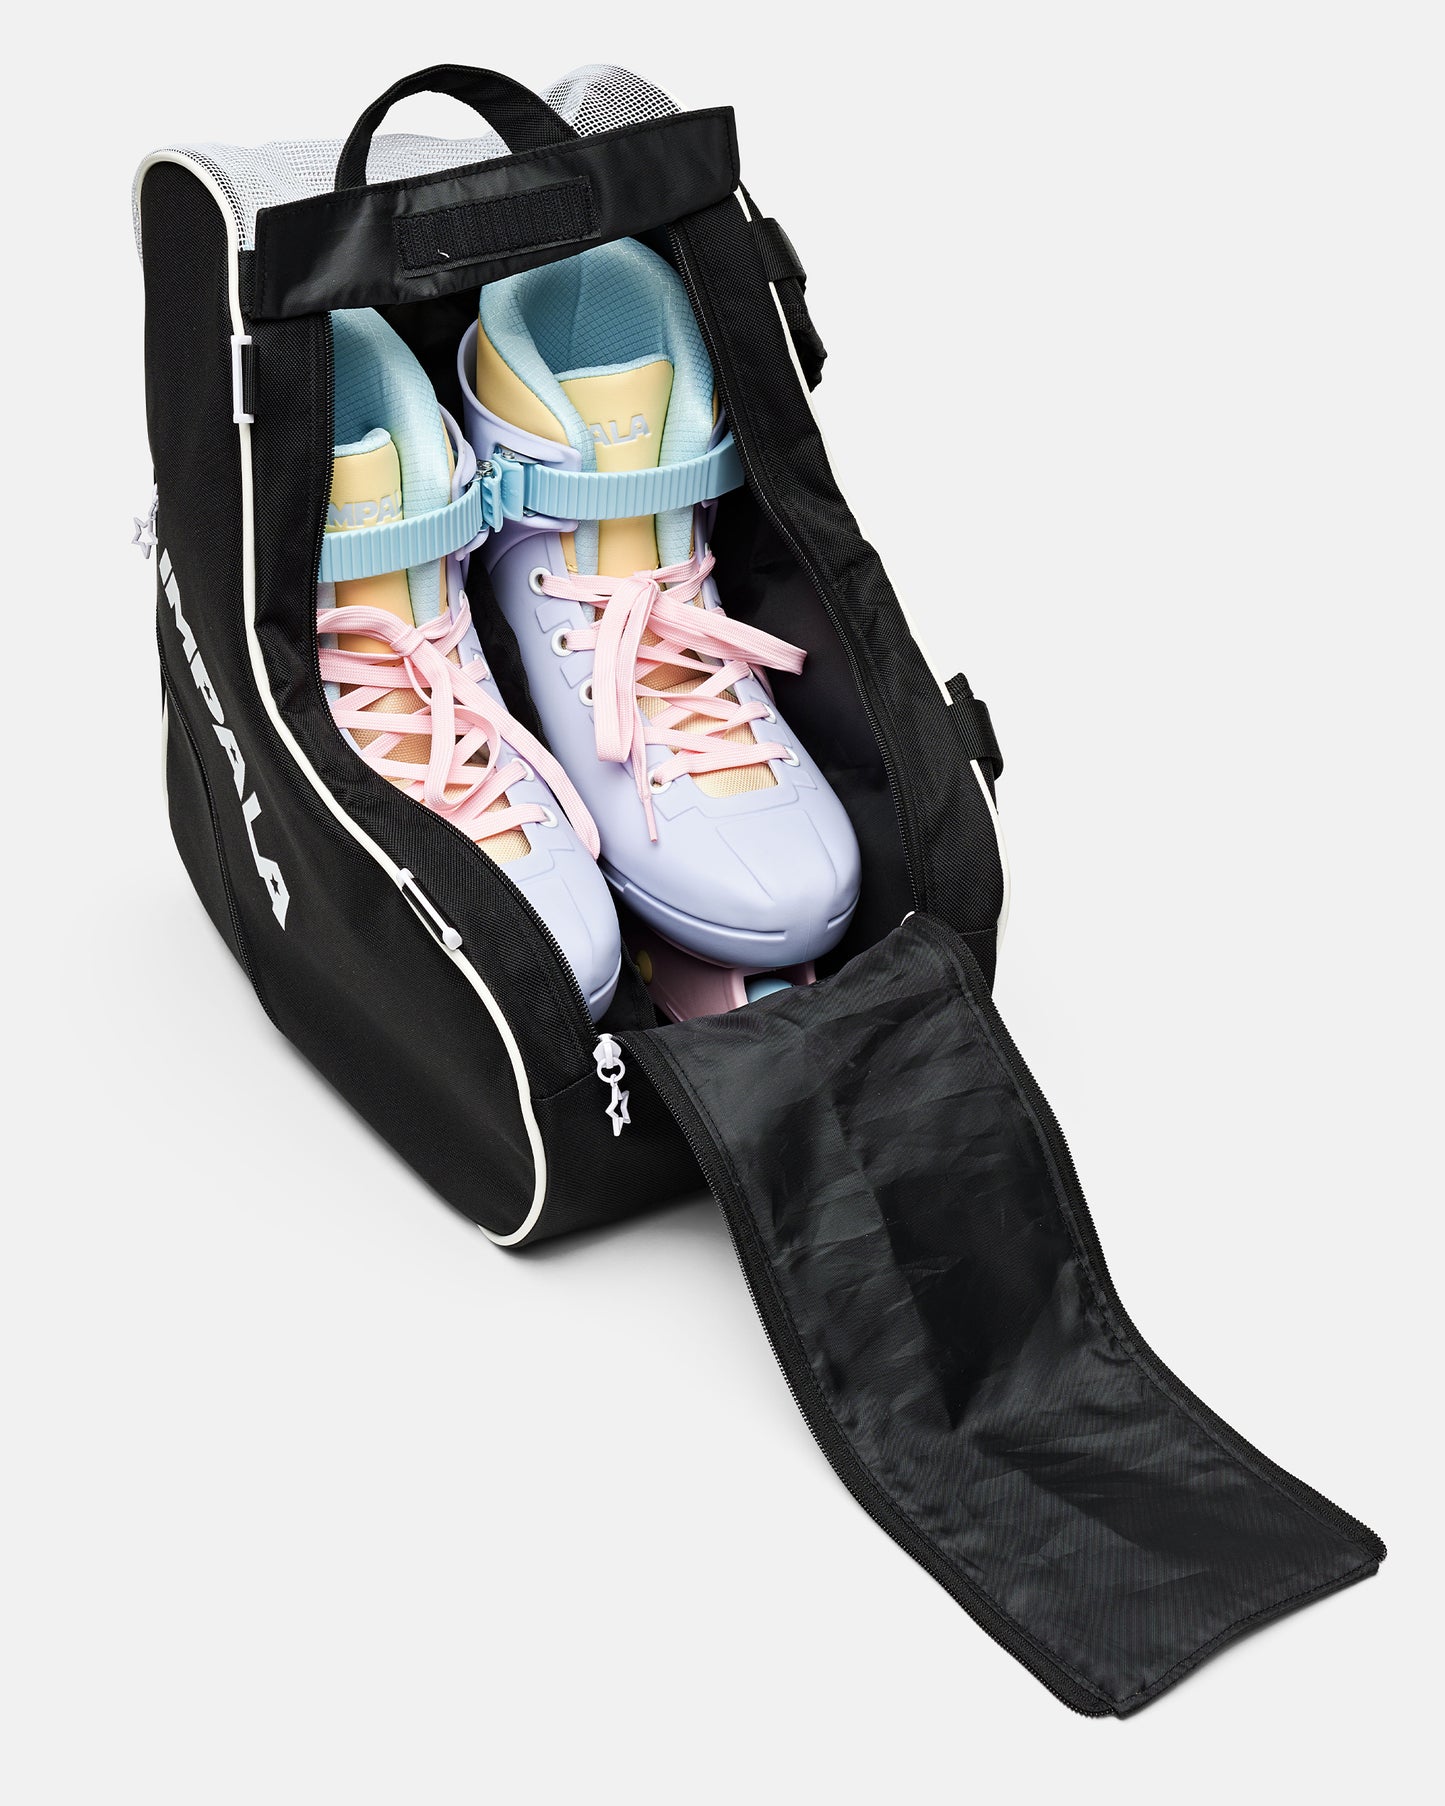 Impala Roller Skates Tote Bag